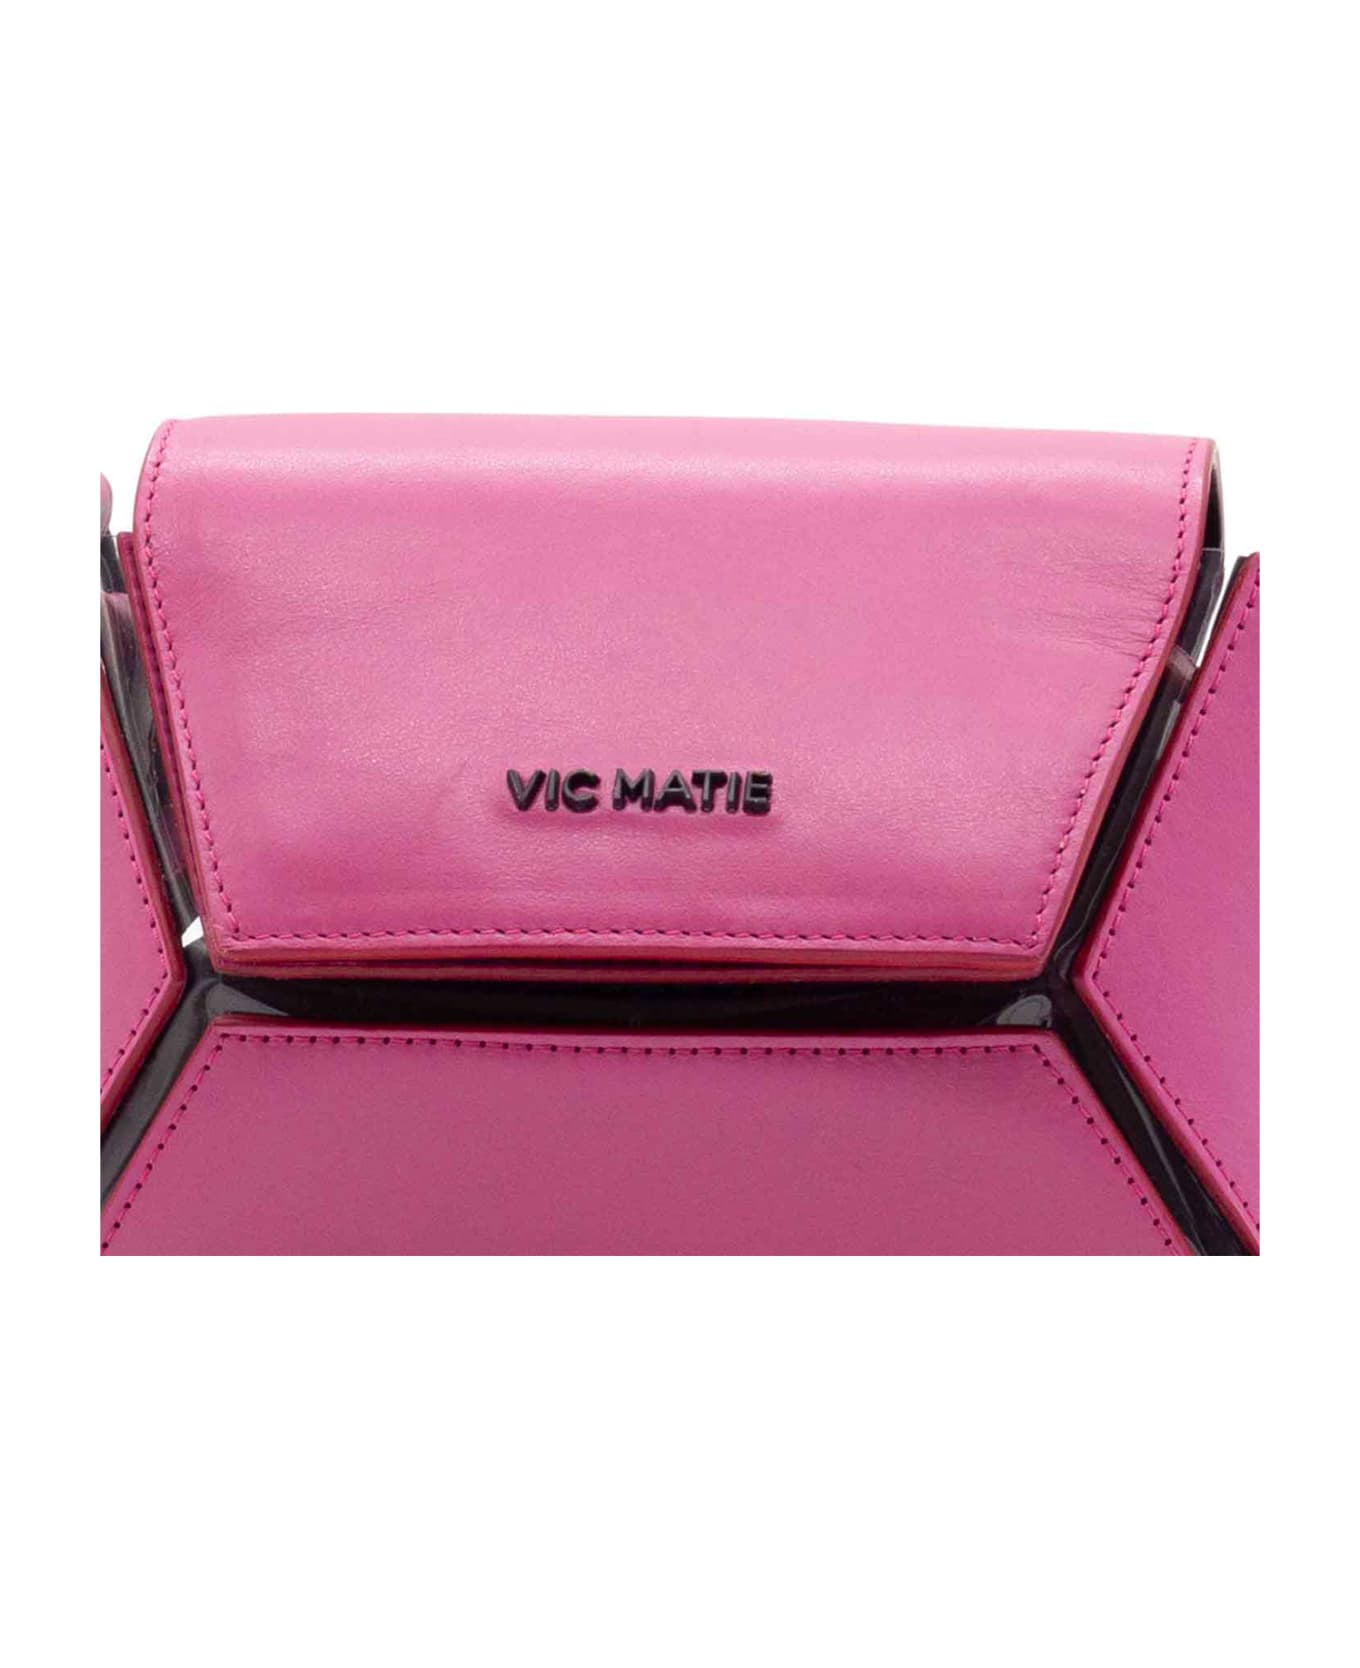 Vic Matié Pink Shoulder Bag With Logo - FUCHSIA